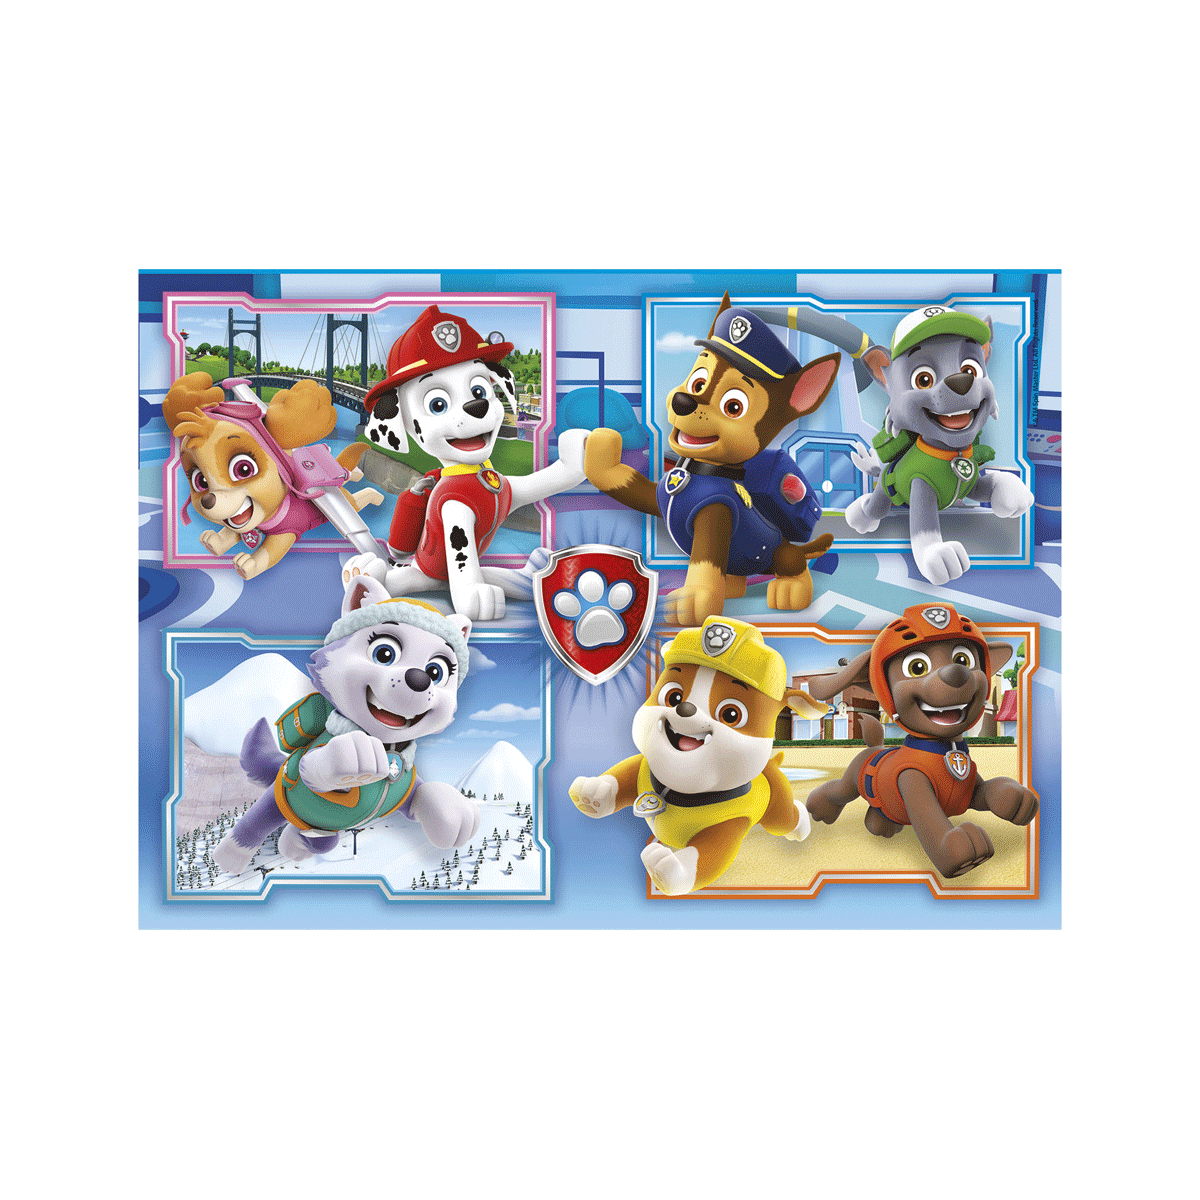 Clementoni supercolor puzzle paw patrol - 2x60 pezzi, puzzle bambini 4 anni - CLEMENTONI